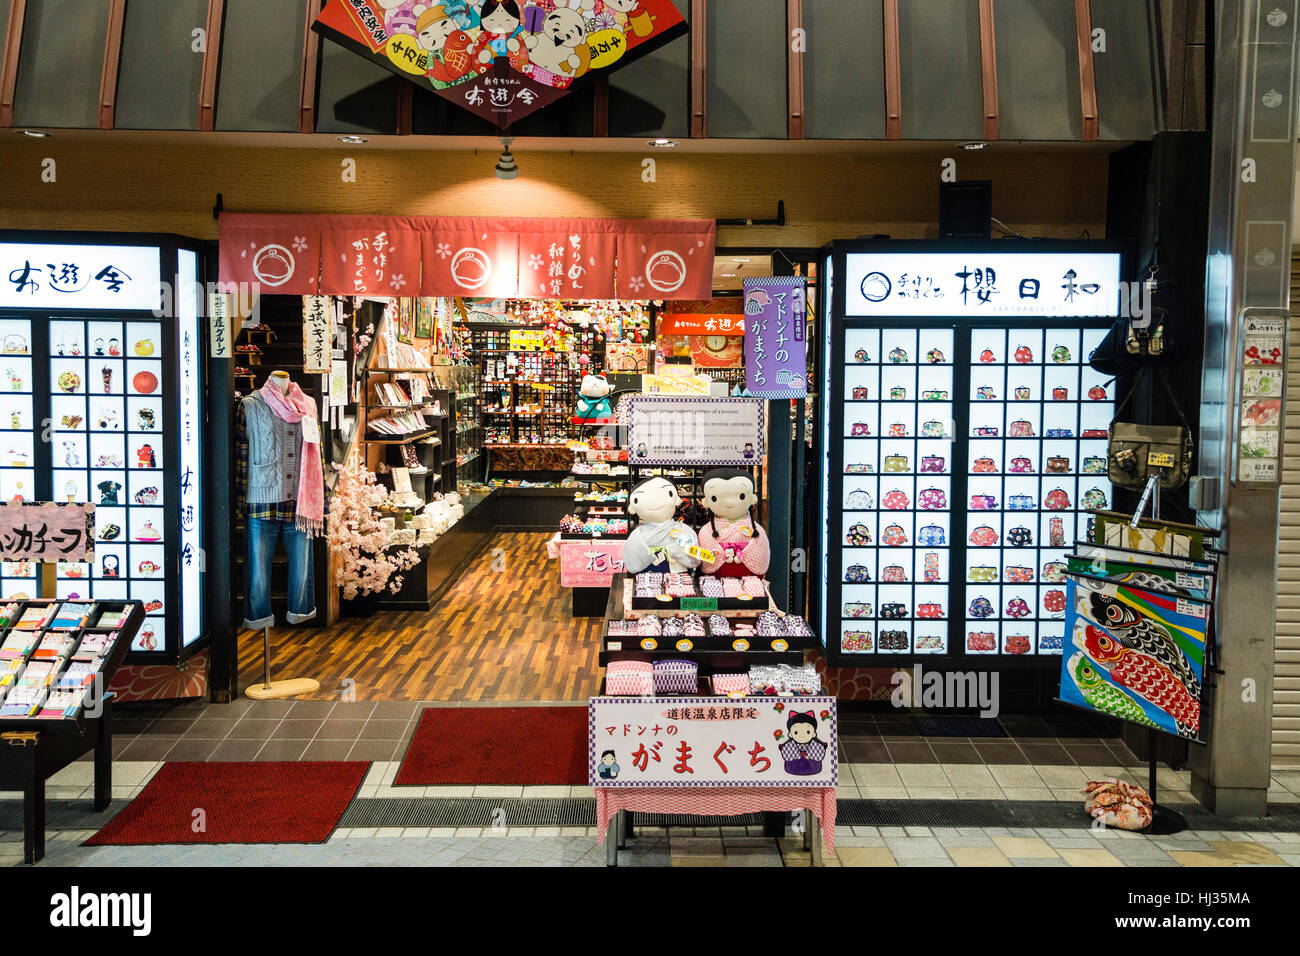 Haikara Fun Anime Shop in Haneda Airport, Japan (Tokyo 2020) 